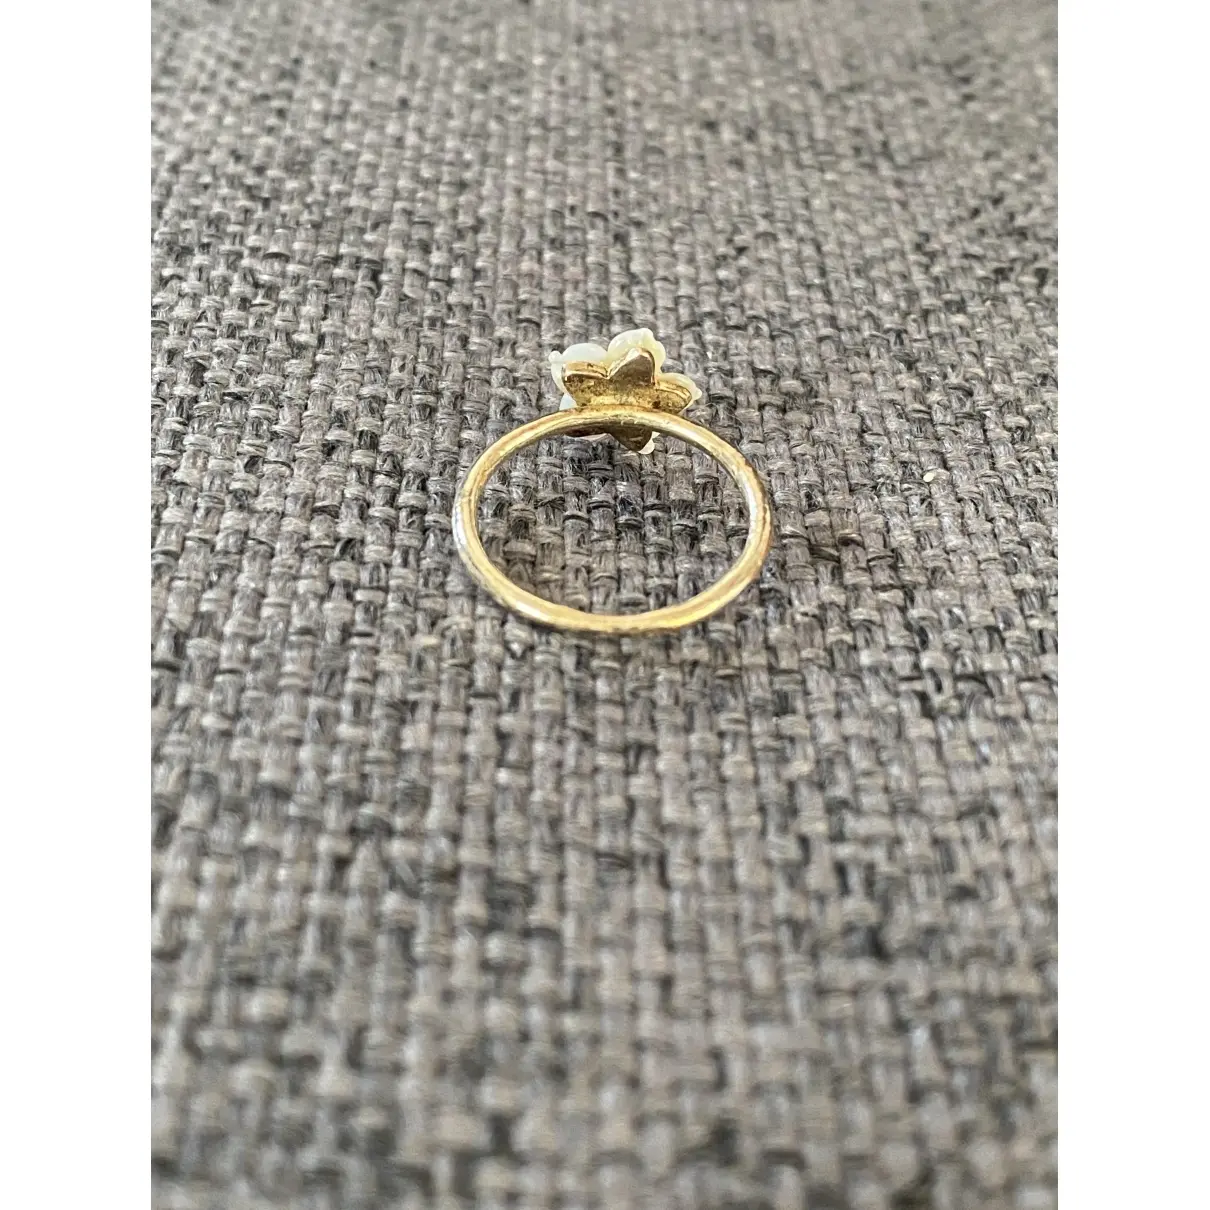 Corpus Christi Silver gilt ring for sale